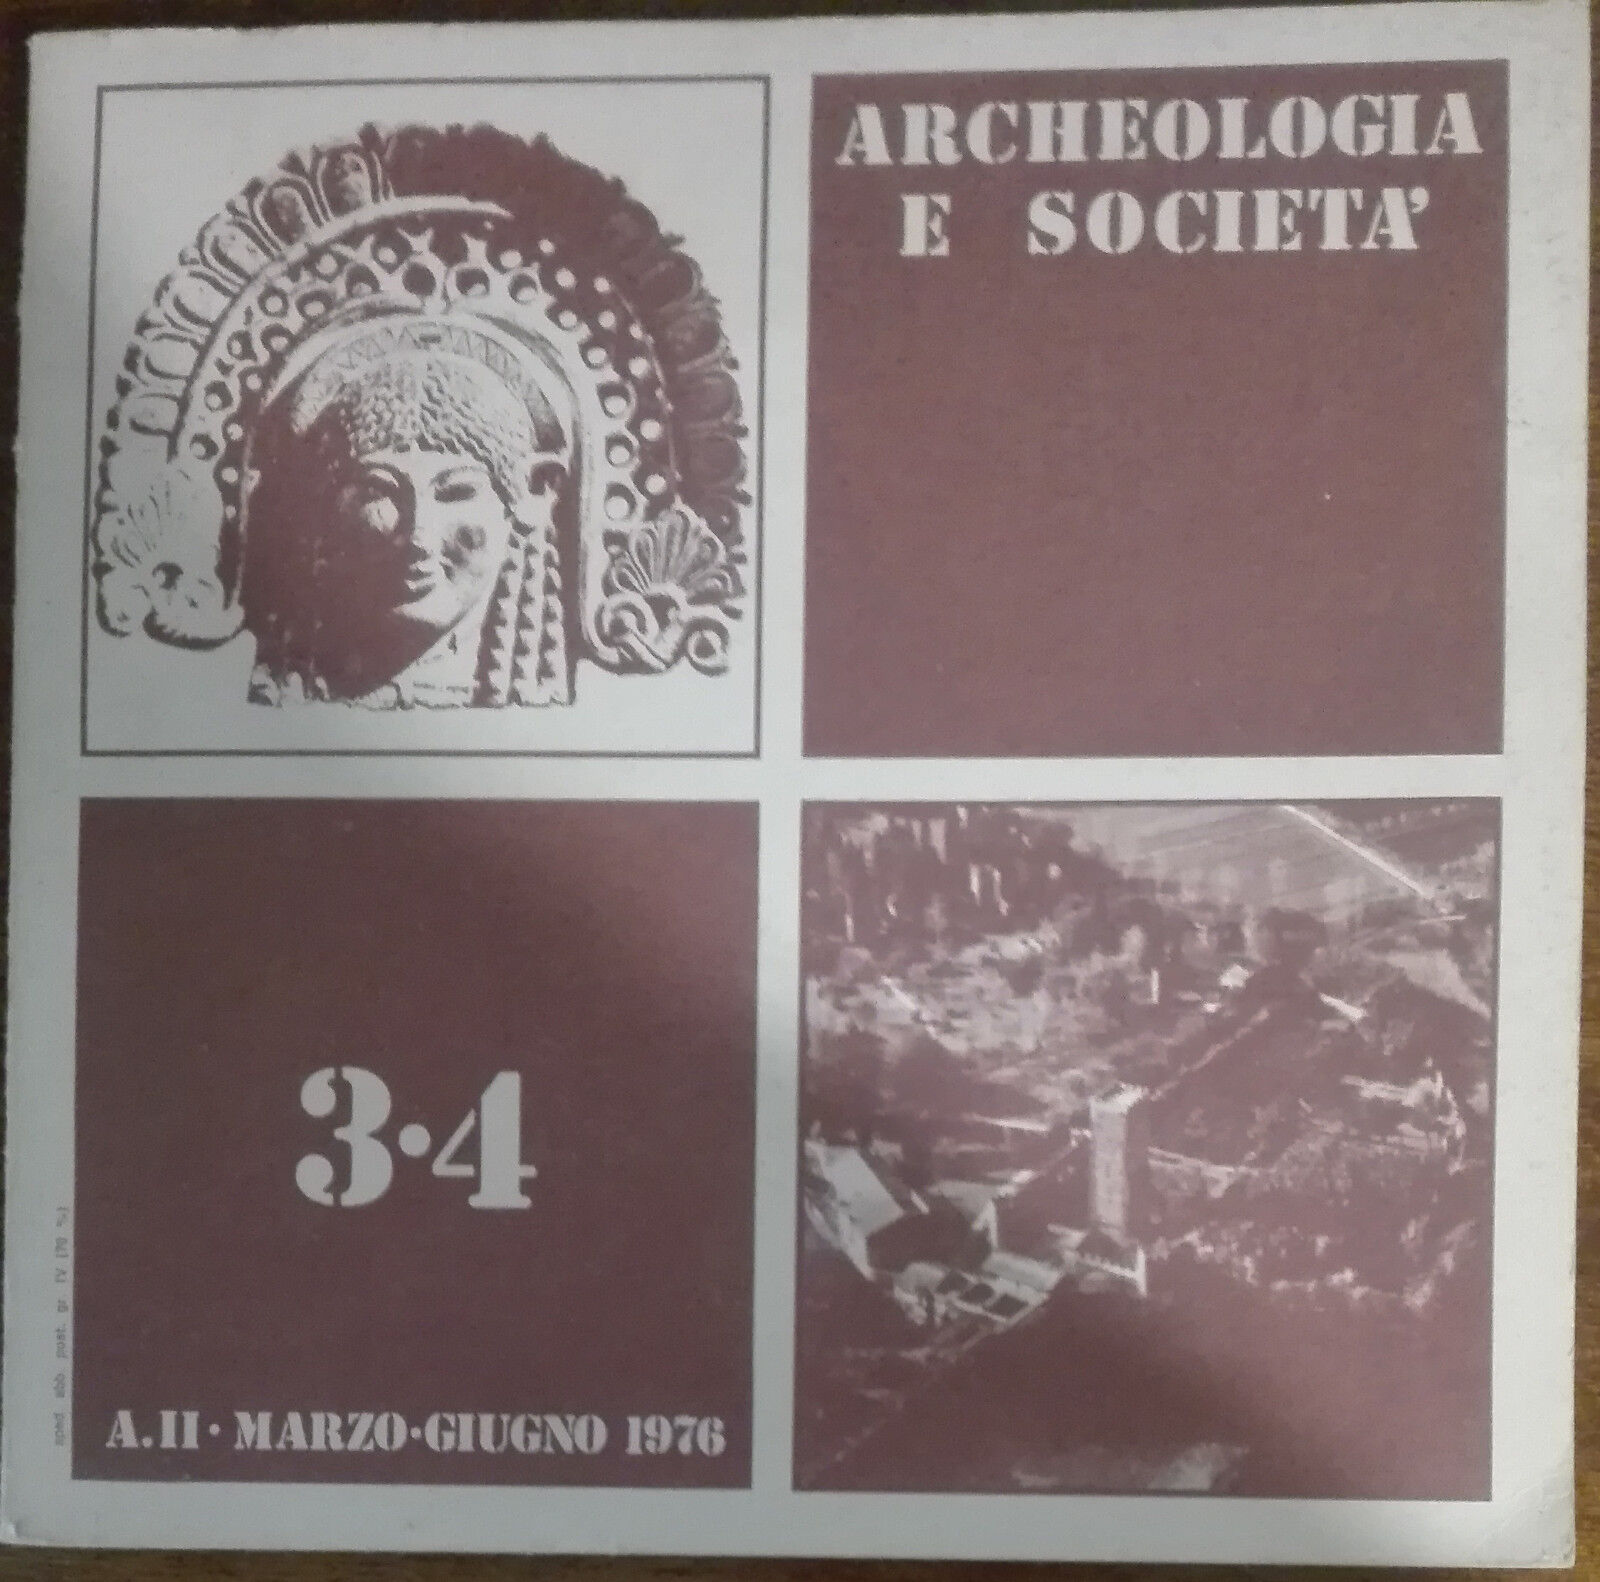 Archeologia e societ? - AA.VV. -  Lanuvium,1976 - A